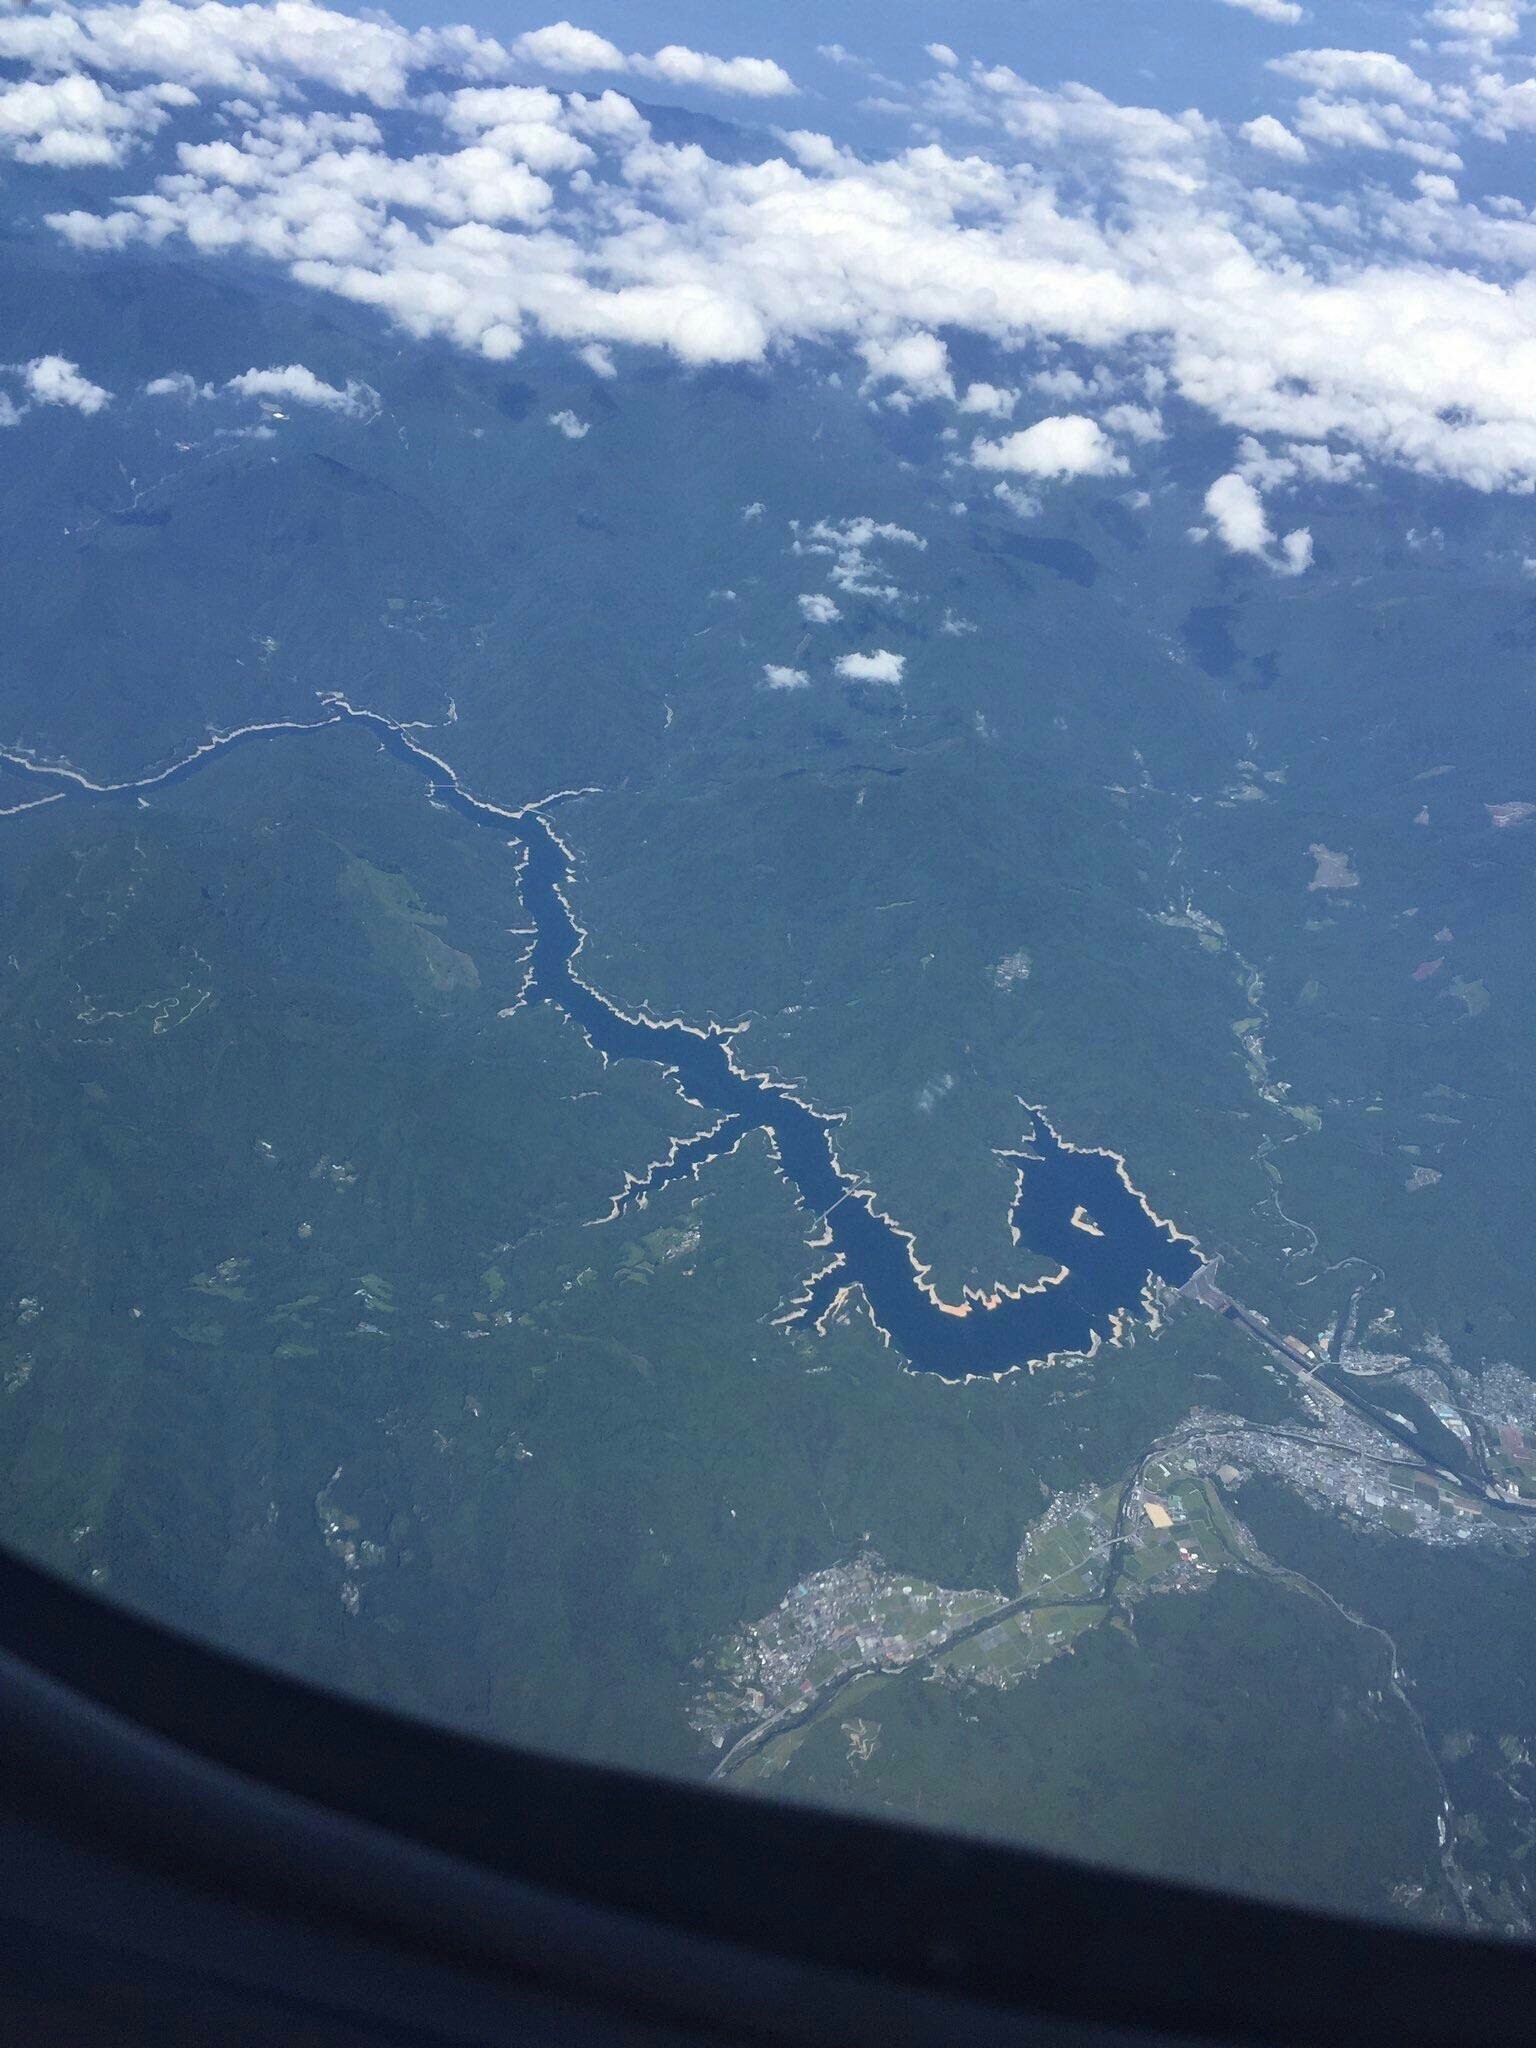 Dragon Shaped River (Samurai Dam in Kochi, Japan) - River, The Dragon, The photo, Reddit